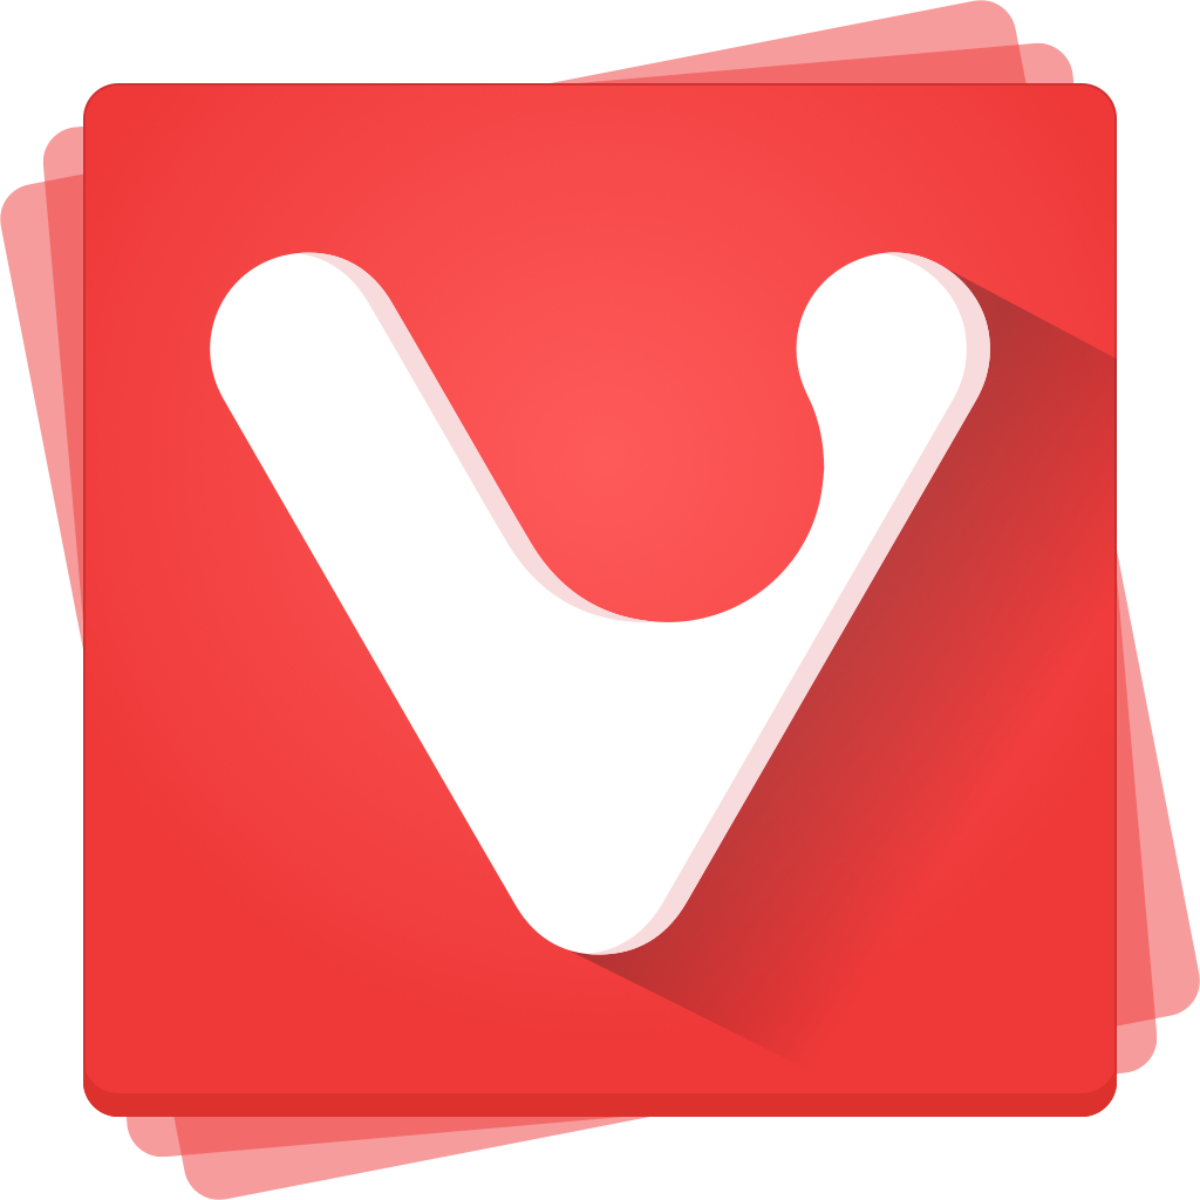 Vivaldi-browser-logo.png